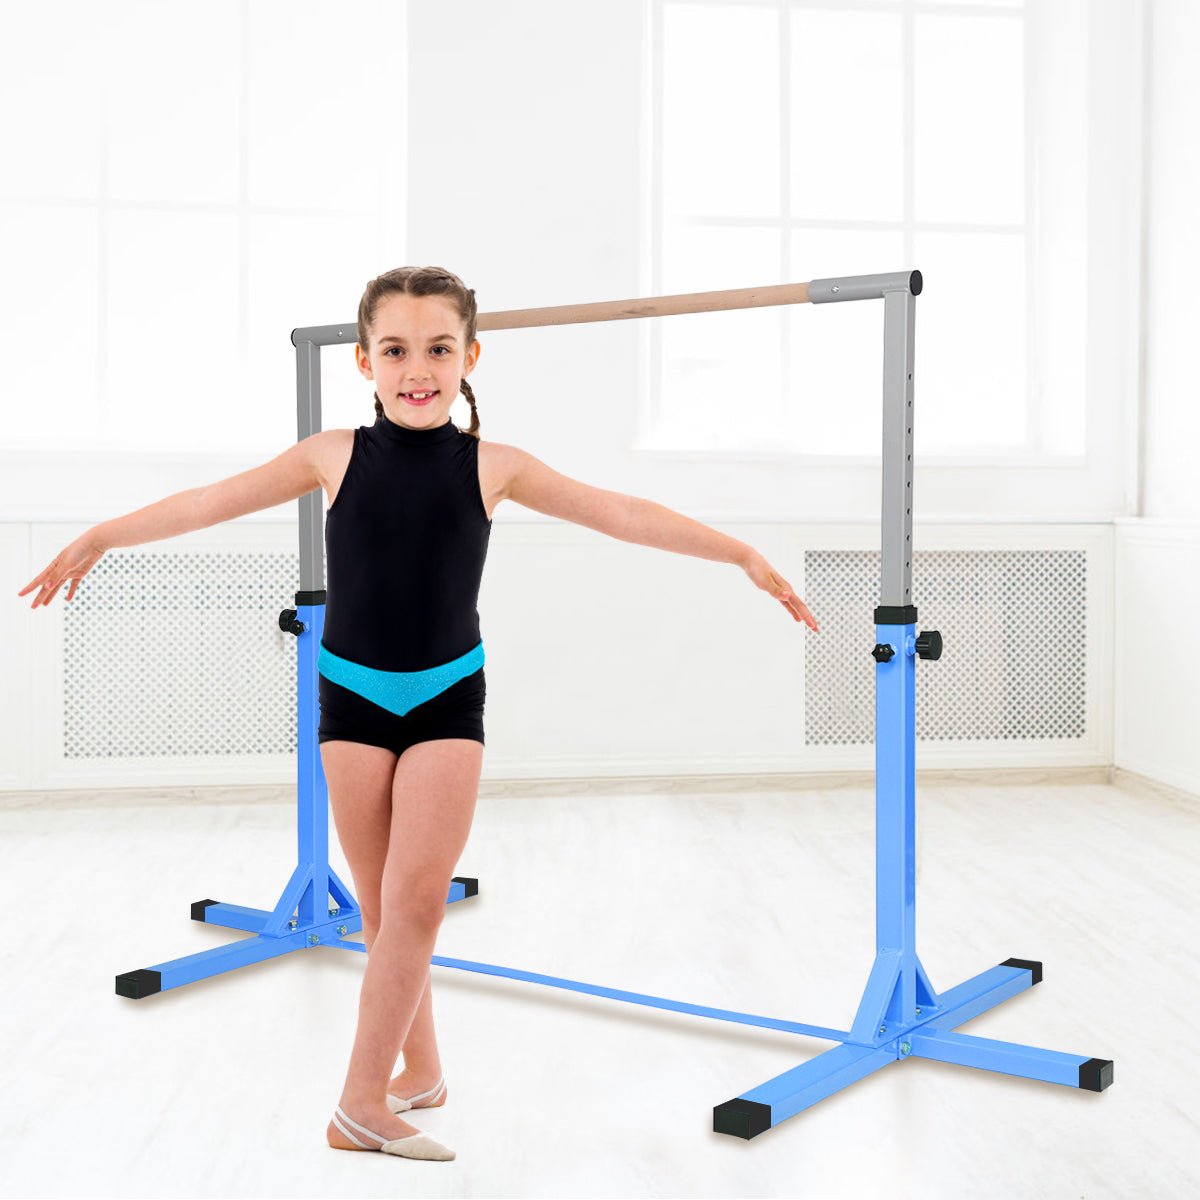 Enhance Gymnastics Skills with the Blue Training Bar